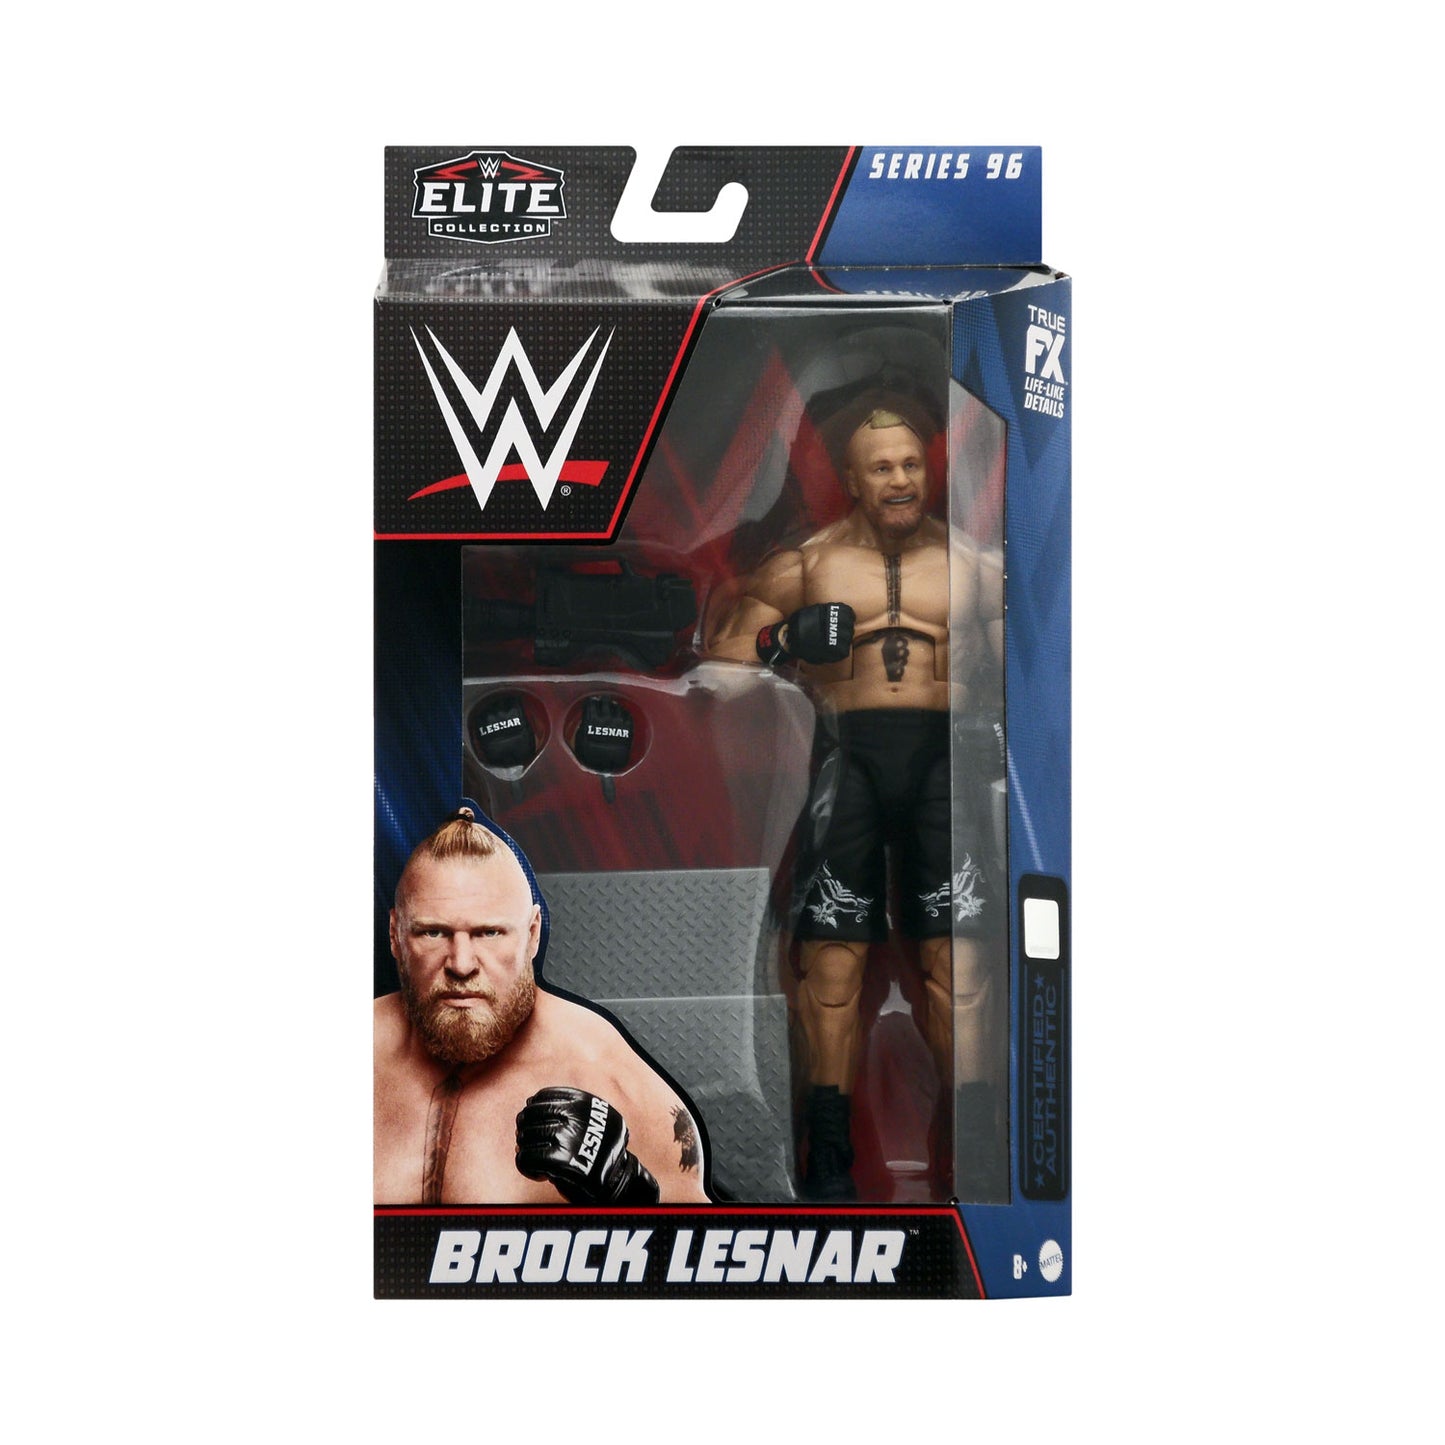 WWE Elite Collection Series 96 Brock Lesnar